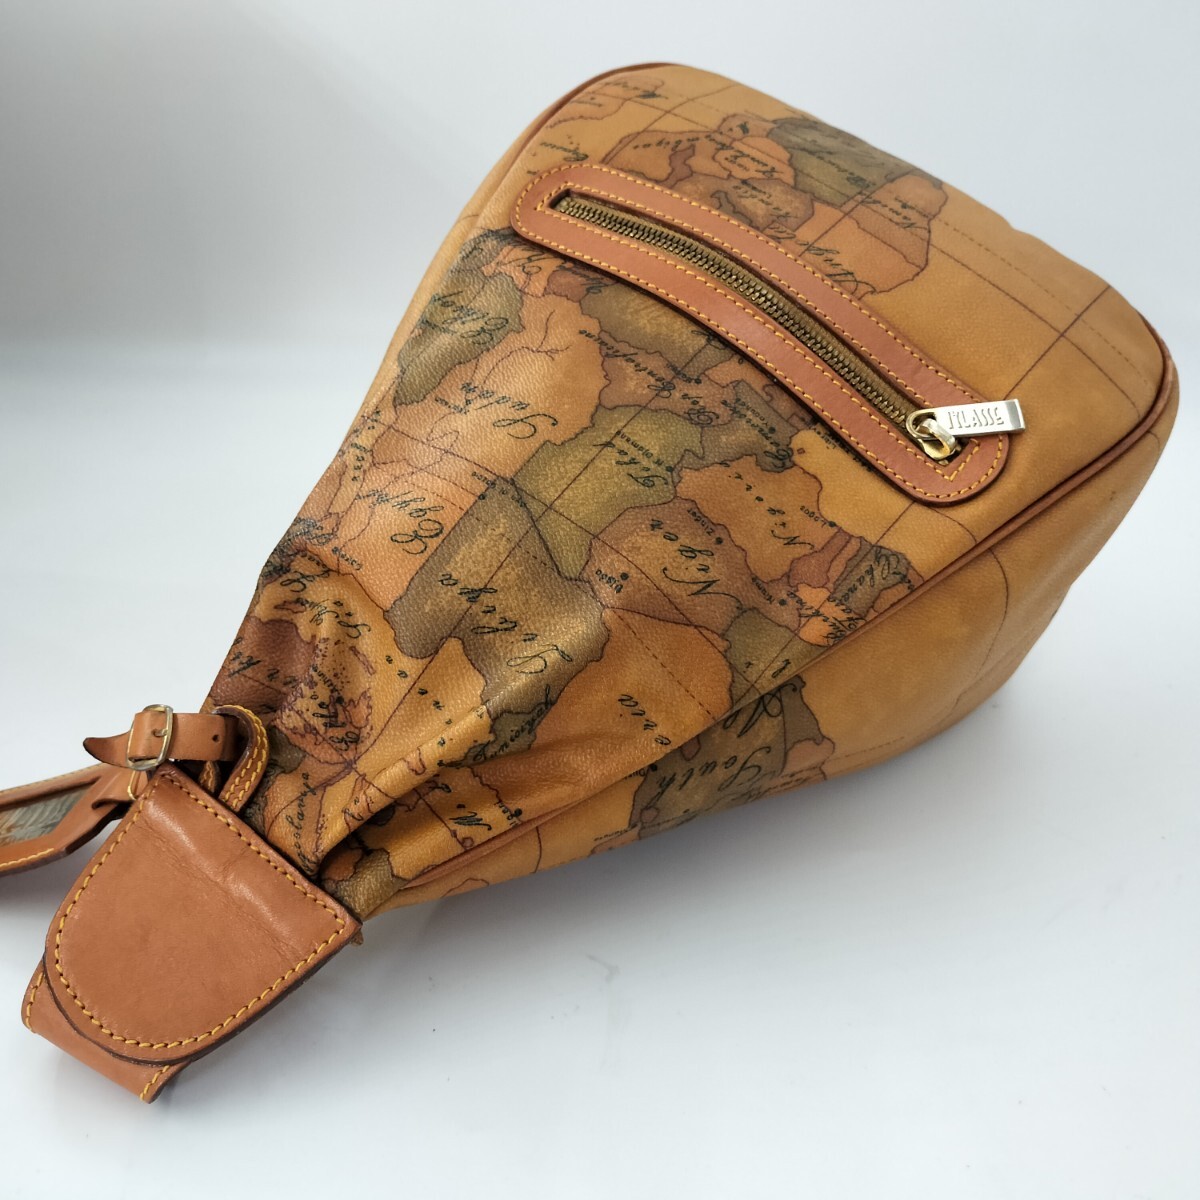  превосходный товар * PRIMA CLASSE 1852 Prima Classe мужской сумка "body" one сумка на плечо карта рисунок карта PVC кожа натуральная кожа машина f Brown 